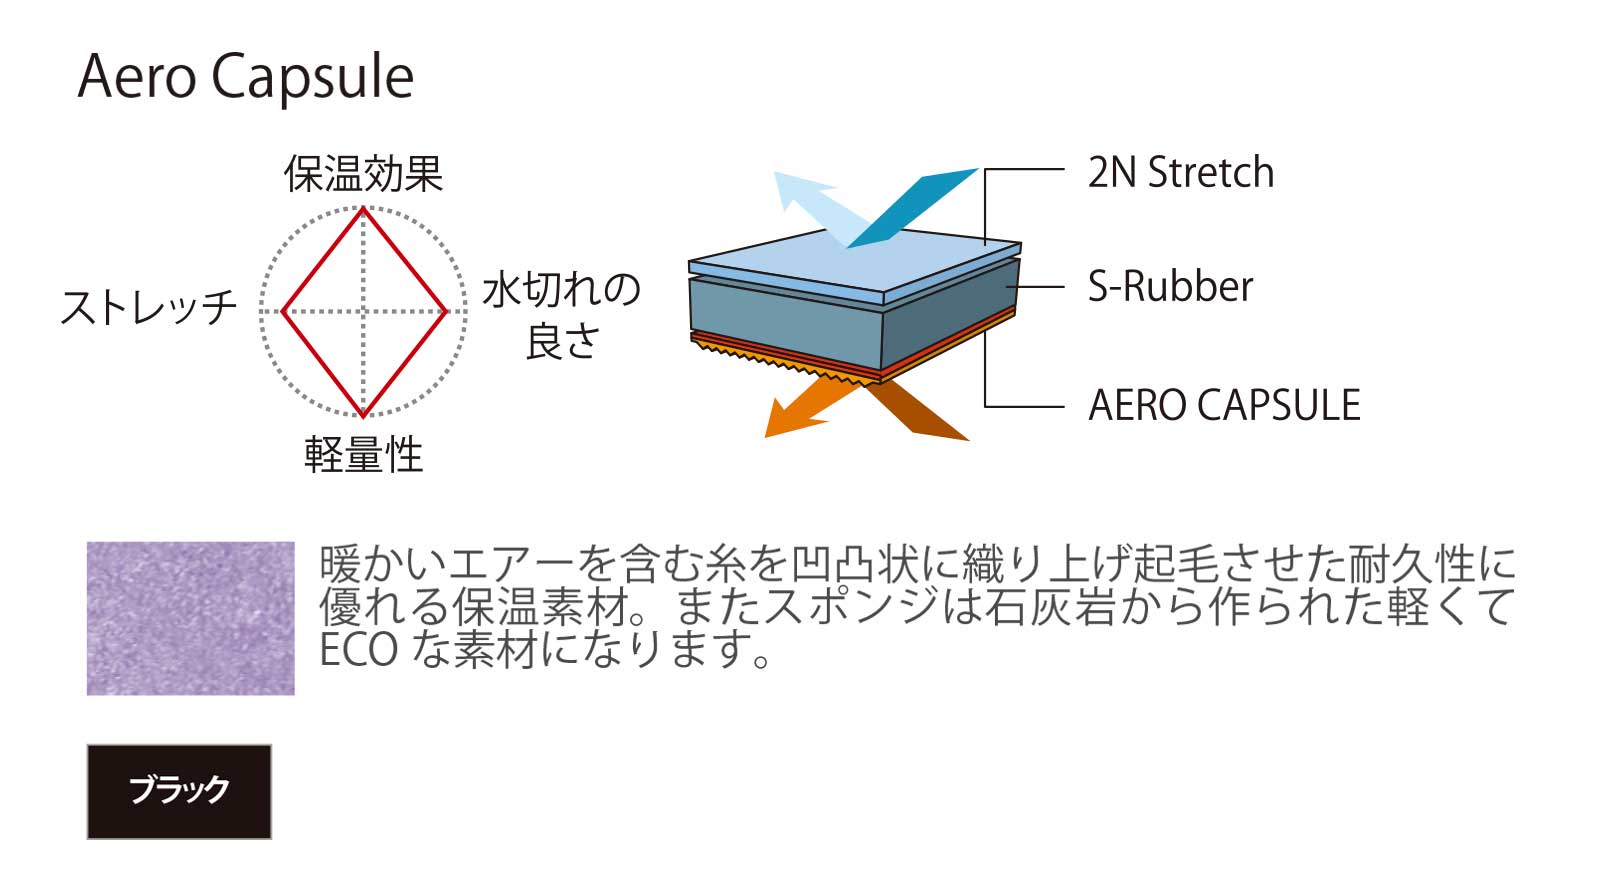 Aero Capsule 暖かいエアーを含む糸を凹凸状に織り上げ起毛させた耐久性に 優れる保温素材。またスポンジは石灰岩から作られた軽くて ECO な素材になります。